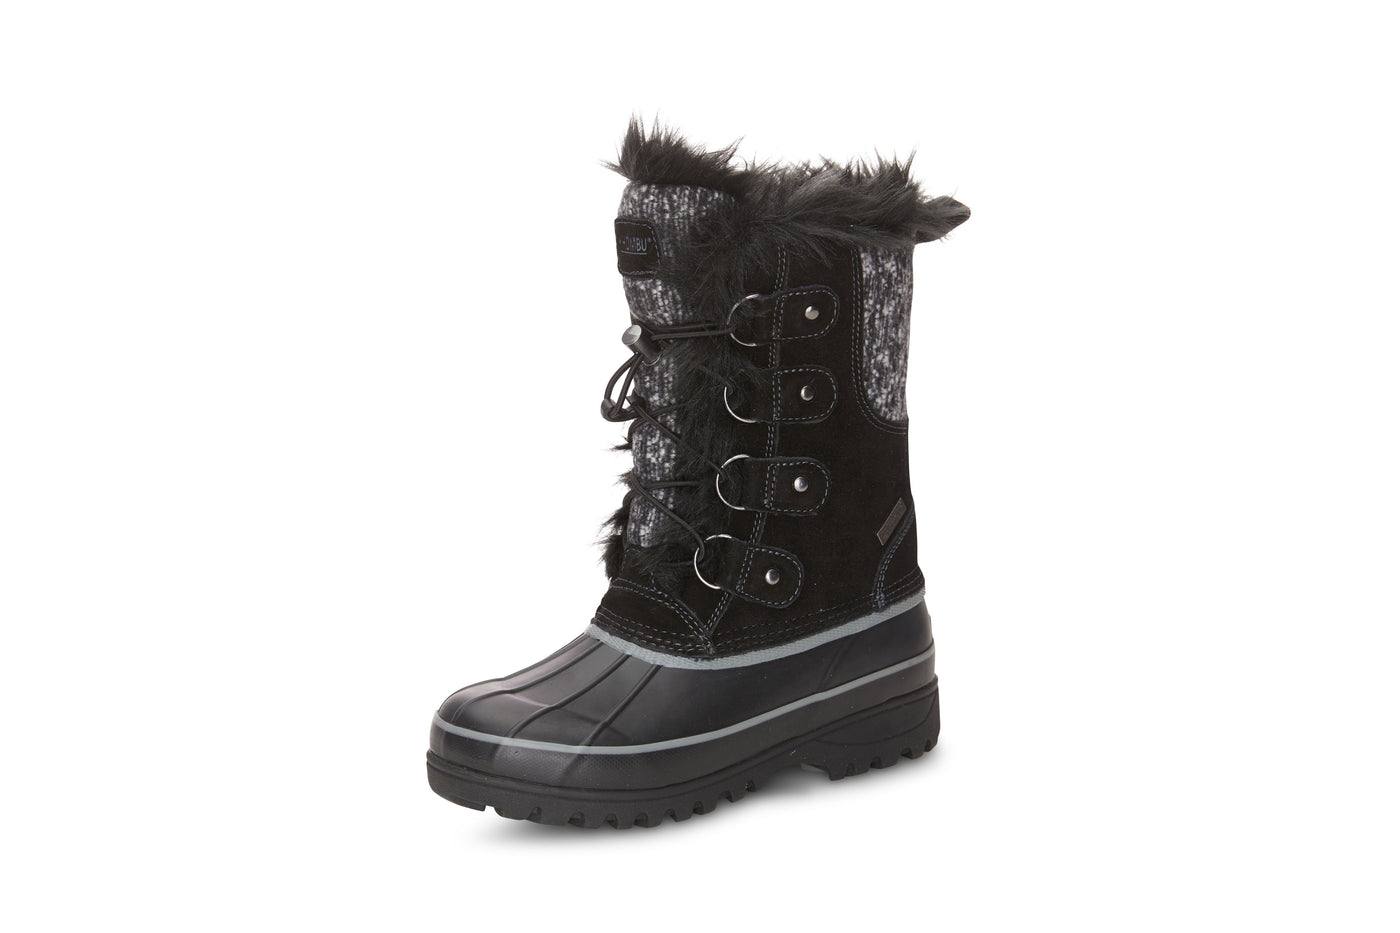 Khombu Nina Waterproof Winter Snow Boots for Women